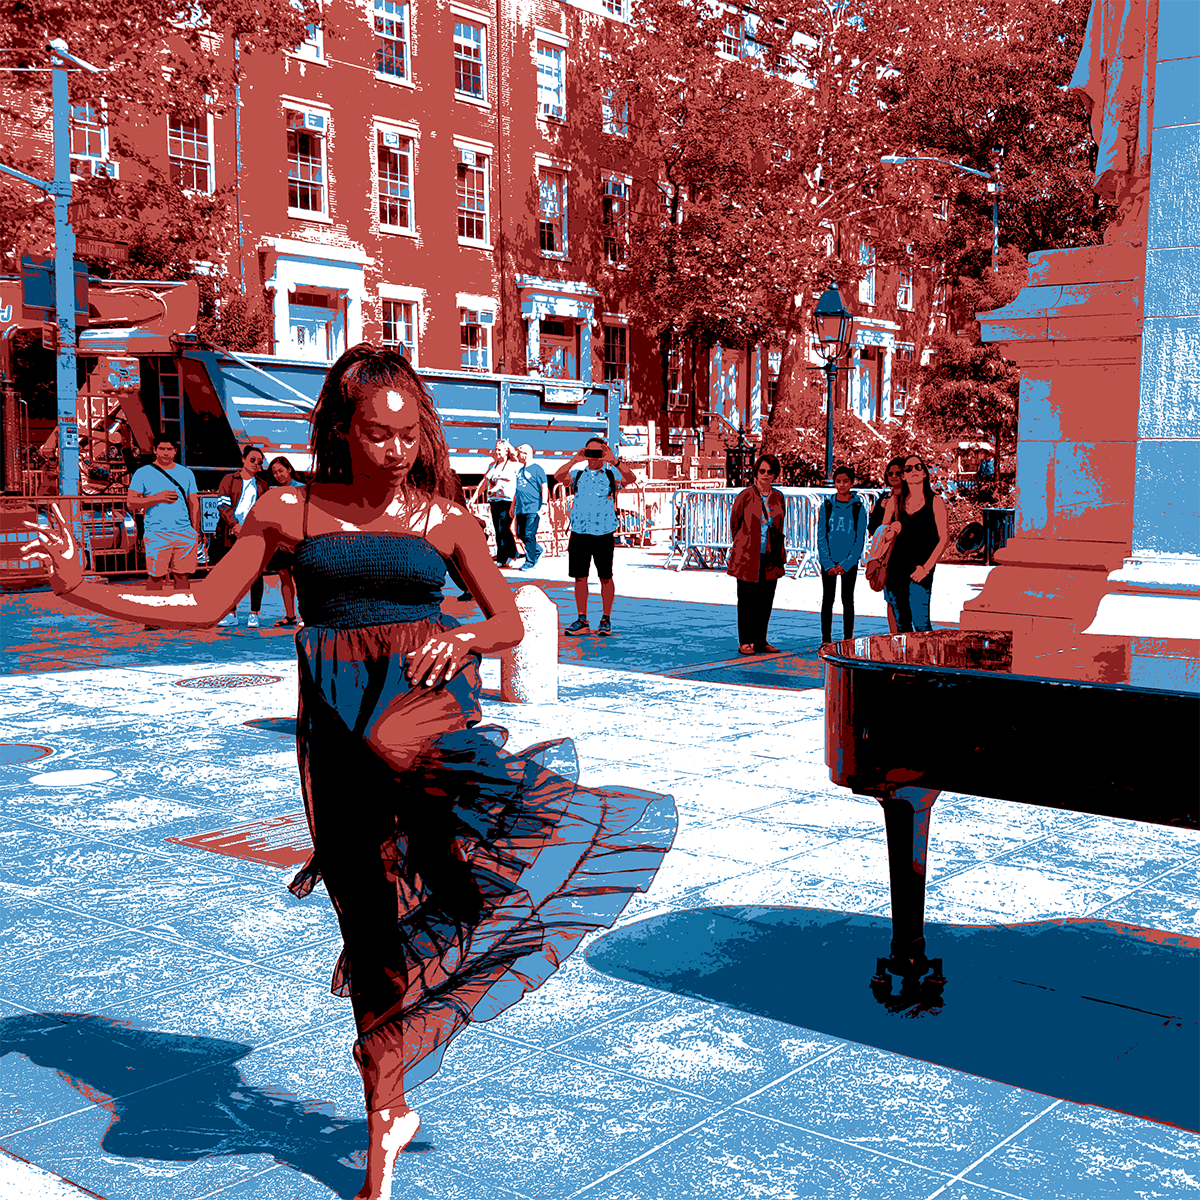 Woman in dress dancing next to a piano.